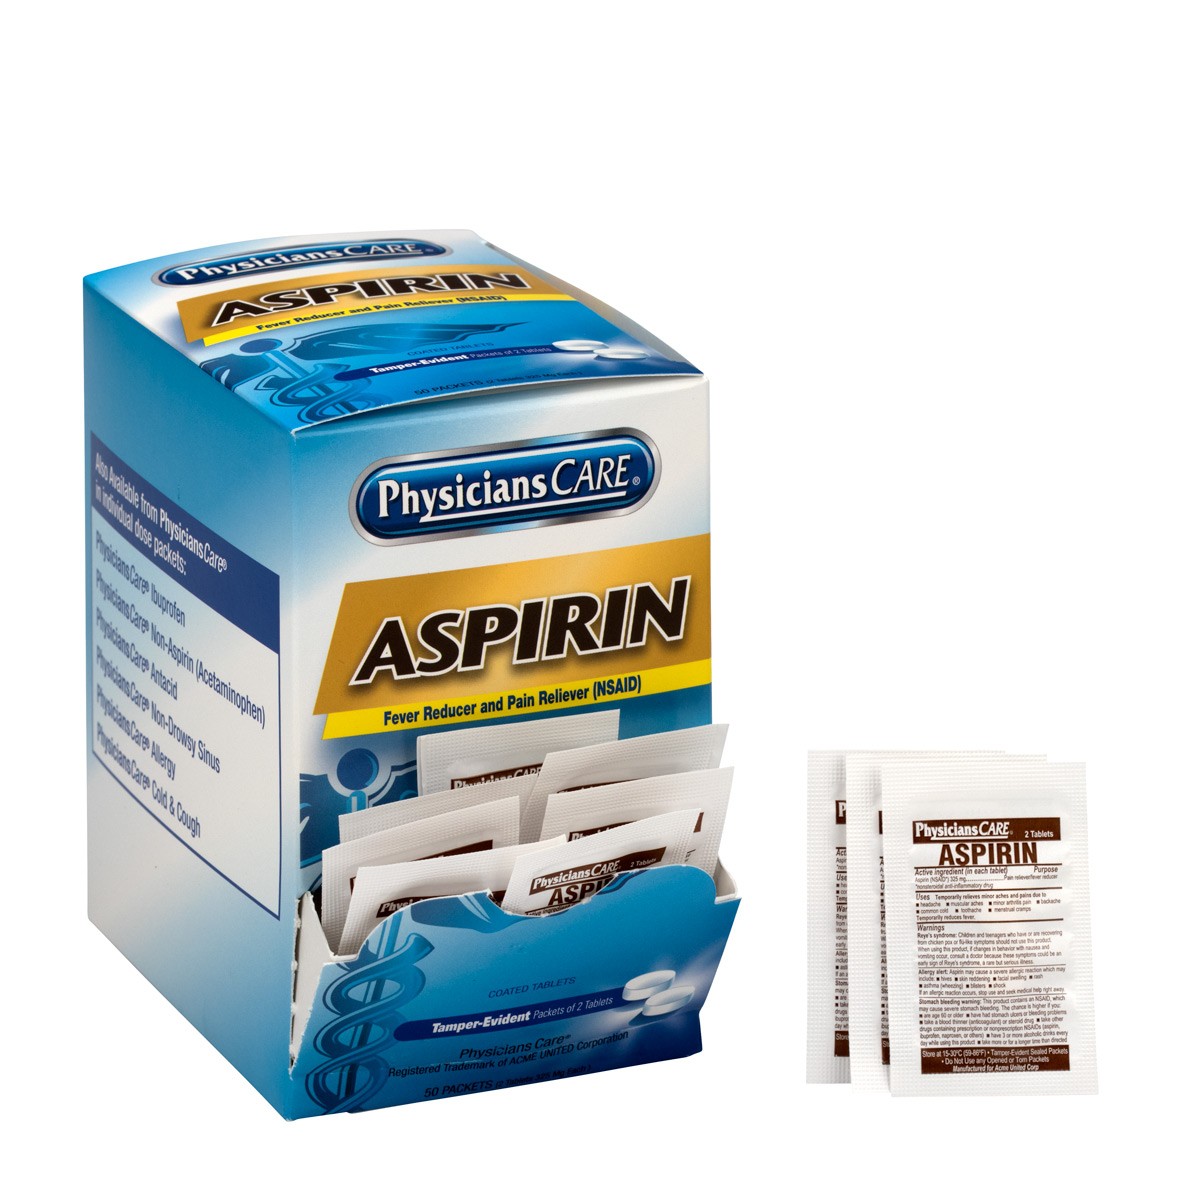 PhysiciansCare 325mg Aspirin, 50x2/Box - First Aid Safety